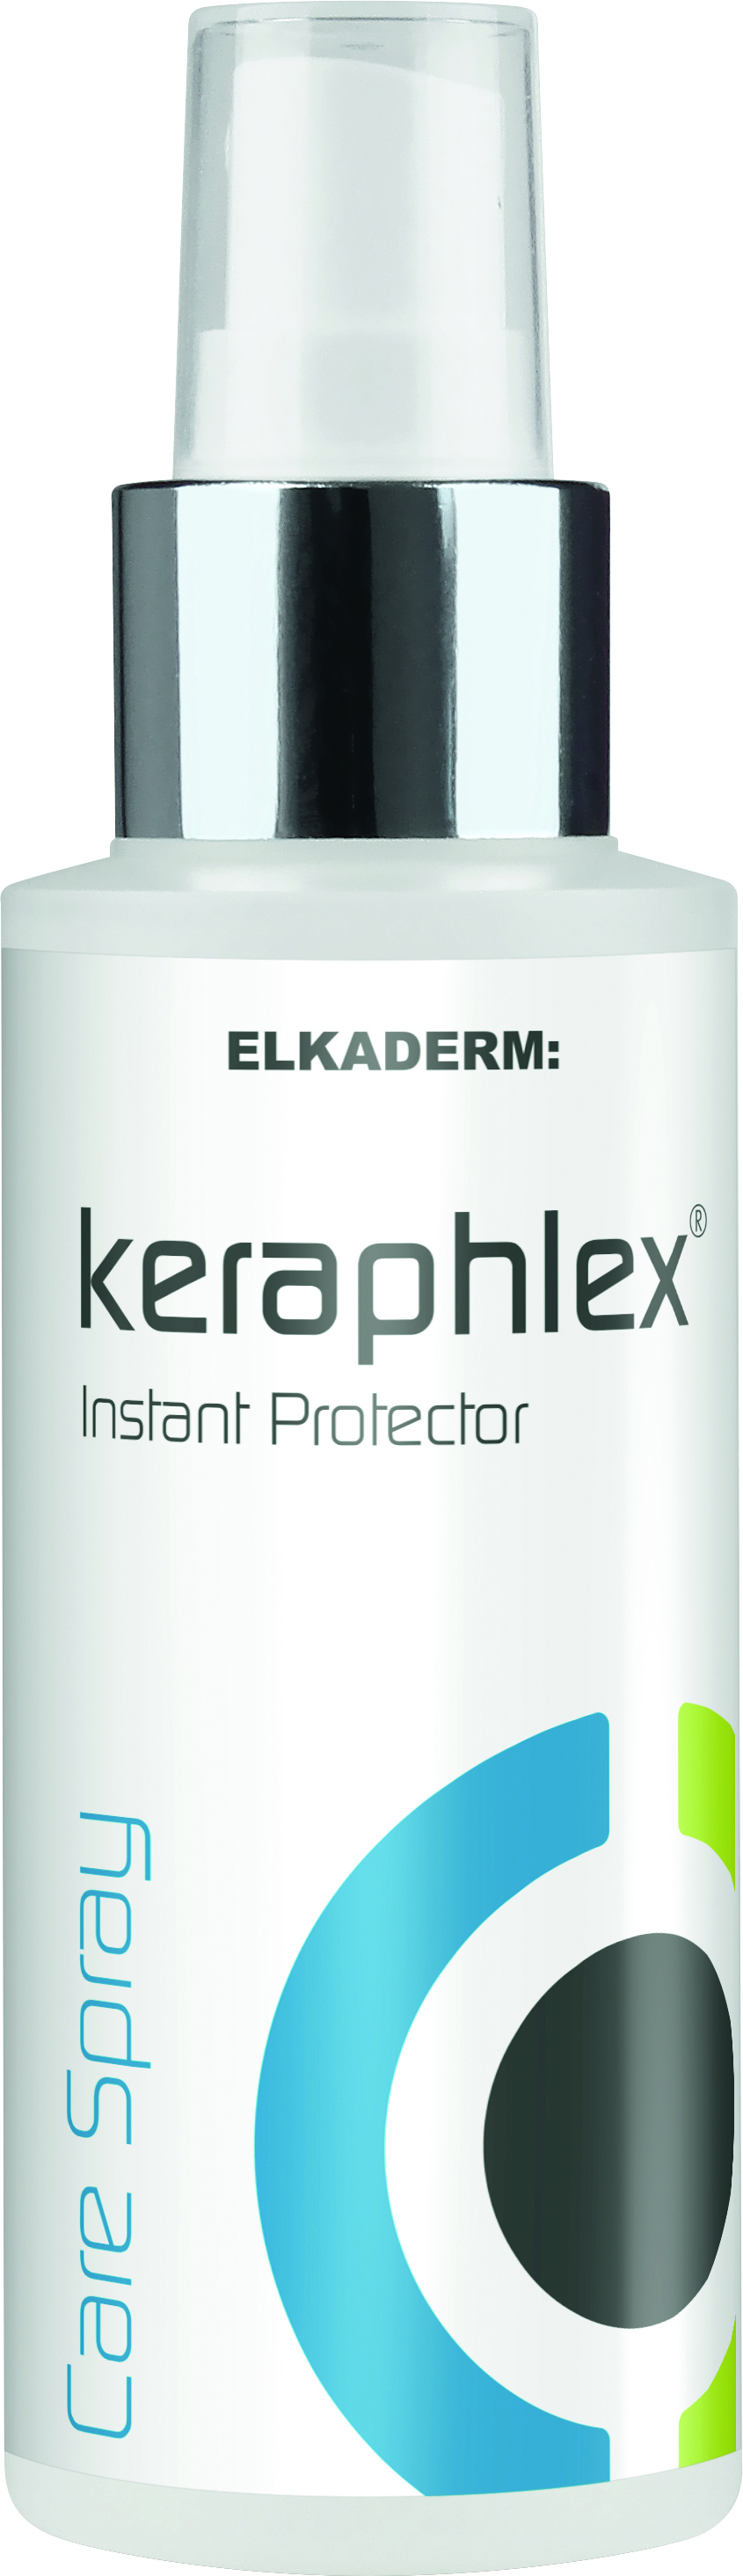 Keraphlex Spray, 100ml